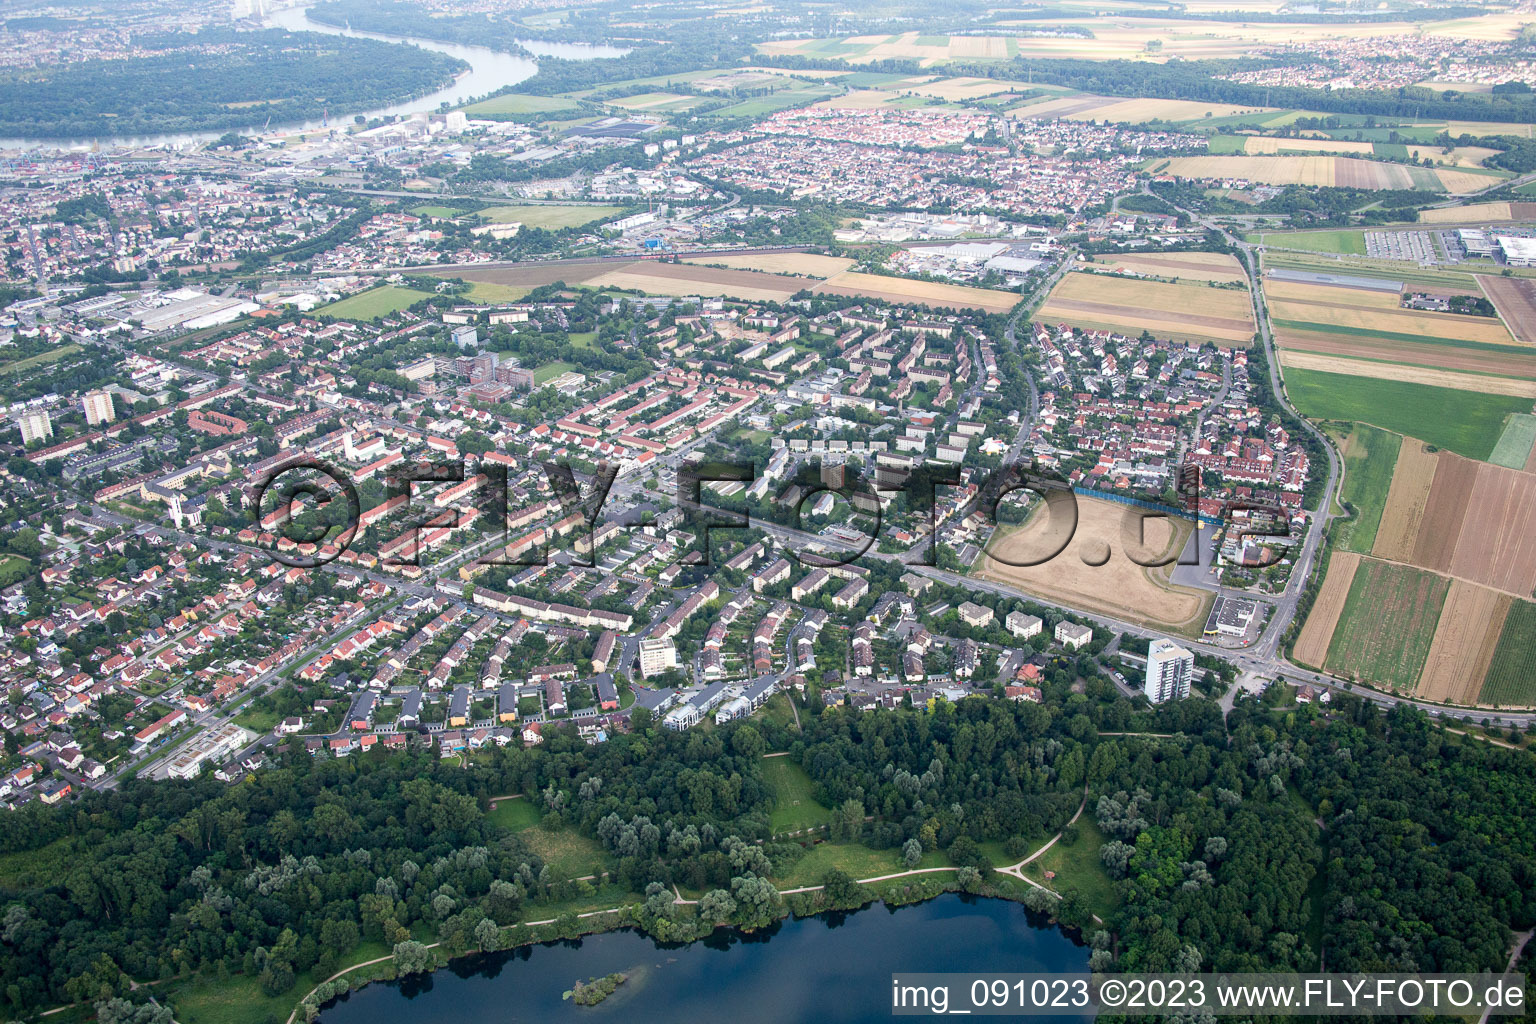 District Gartenstadt in Ludwigshafen am Rhein in the state Rhineland-Palatinate, Germany from above